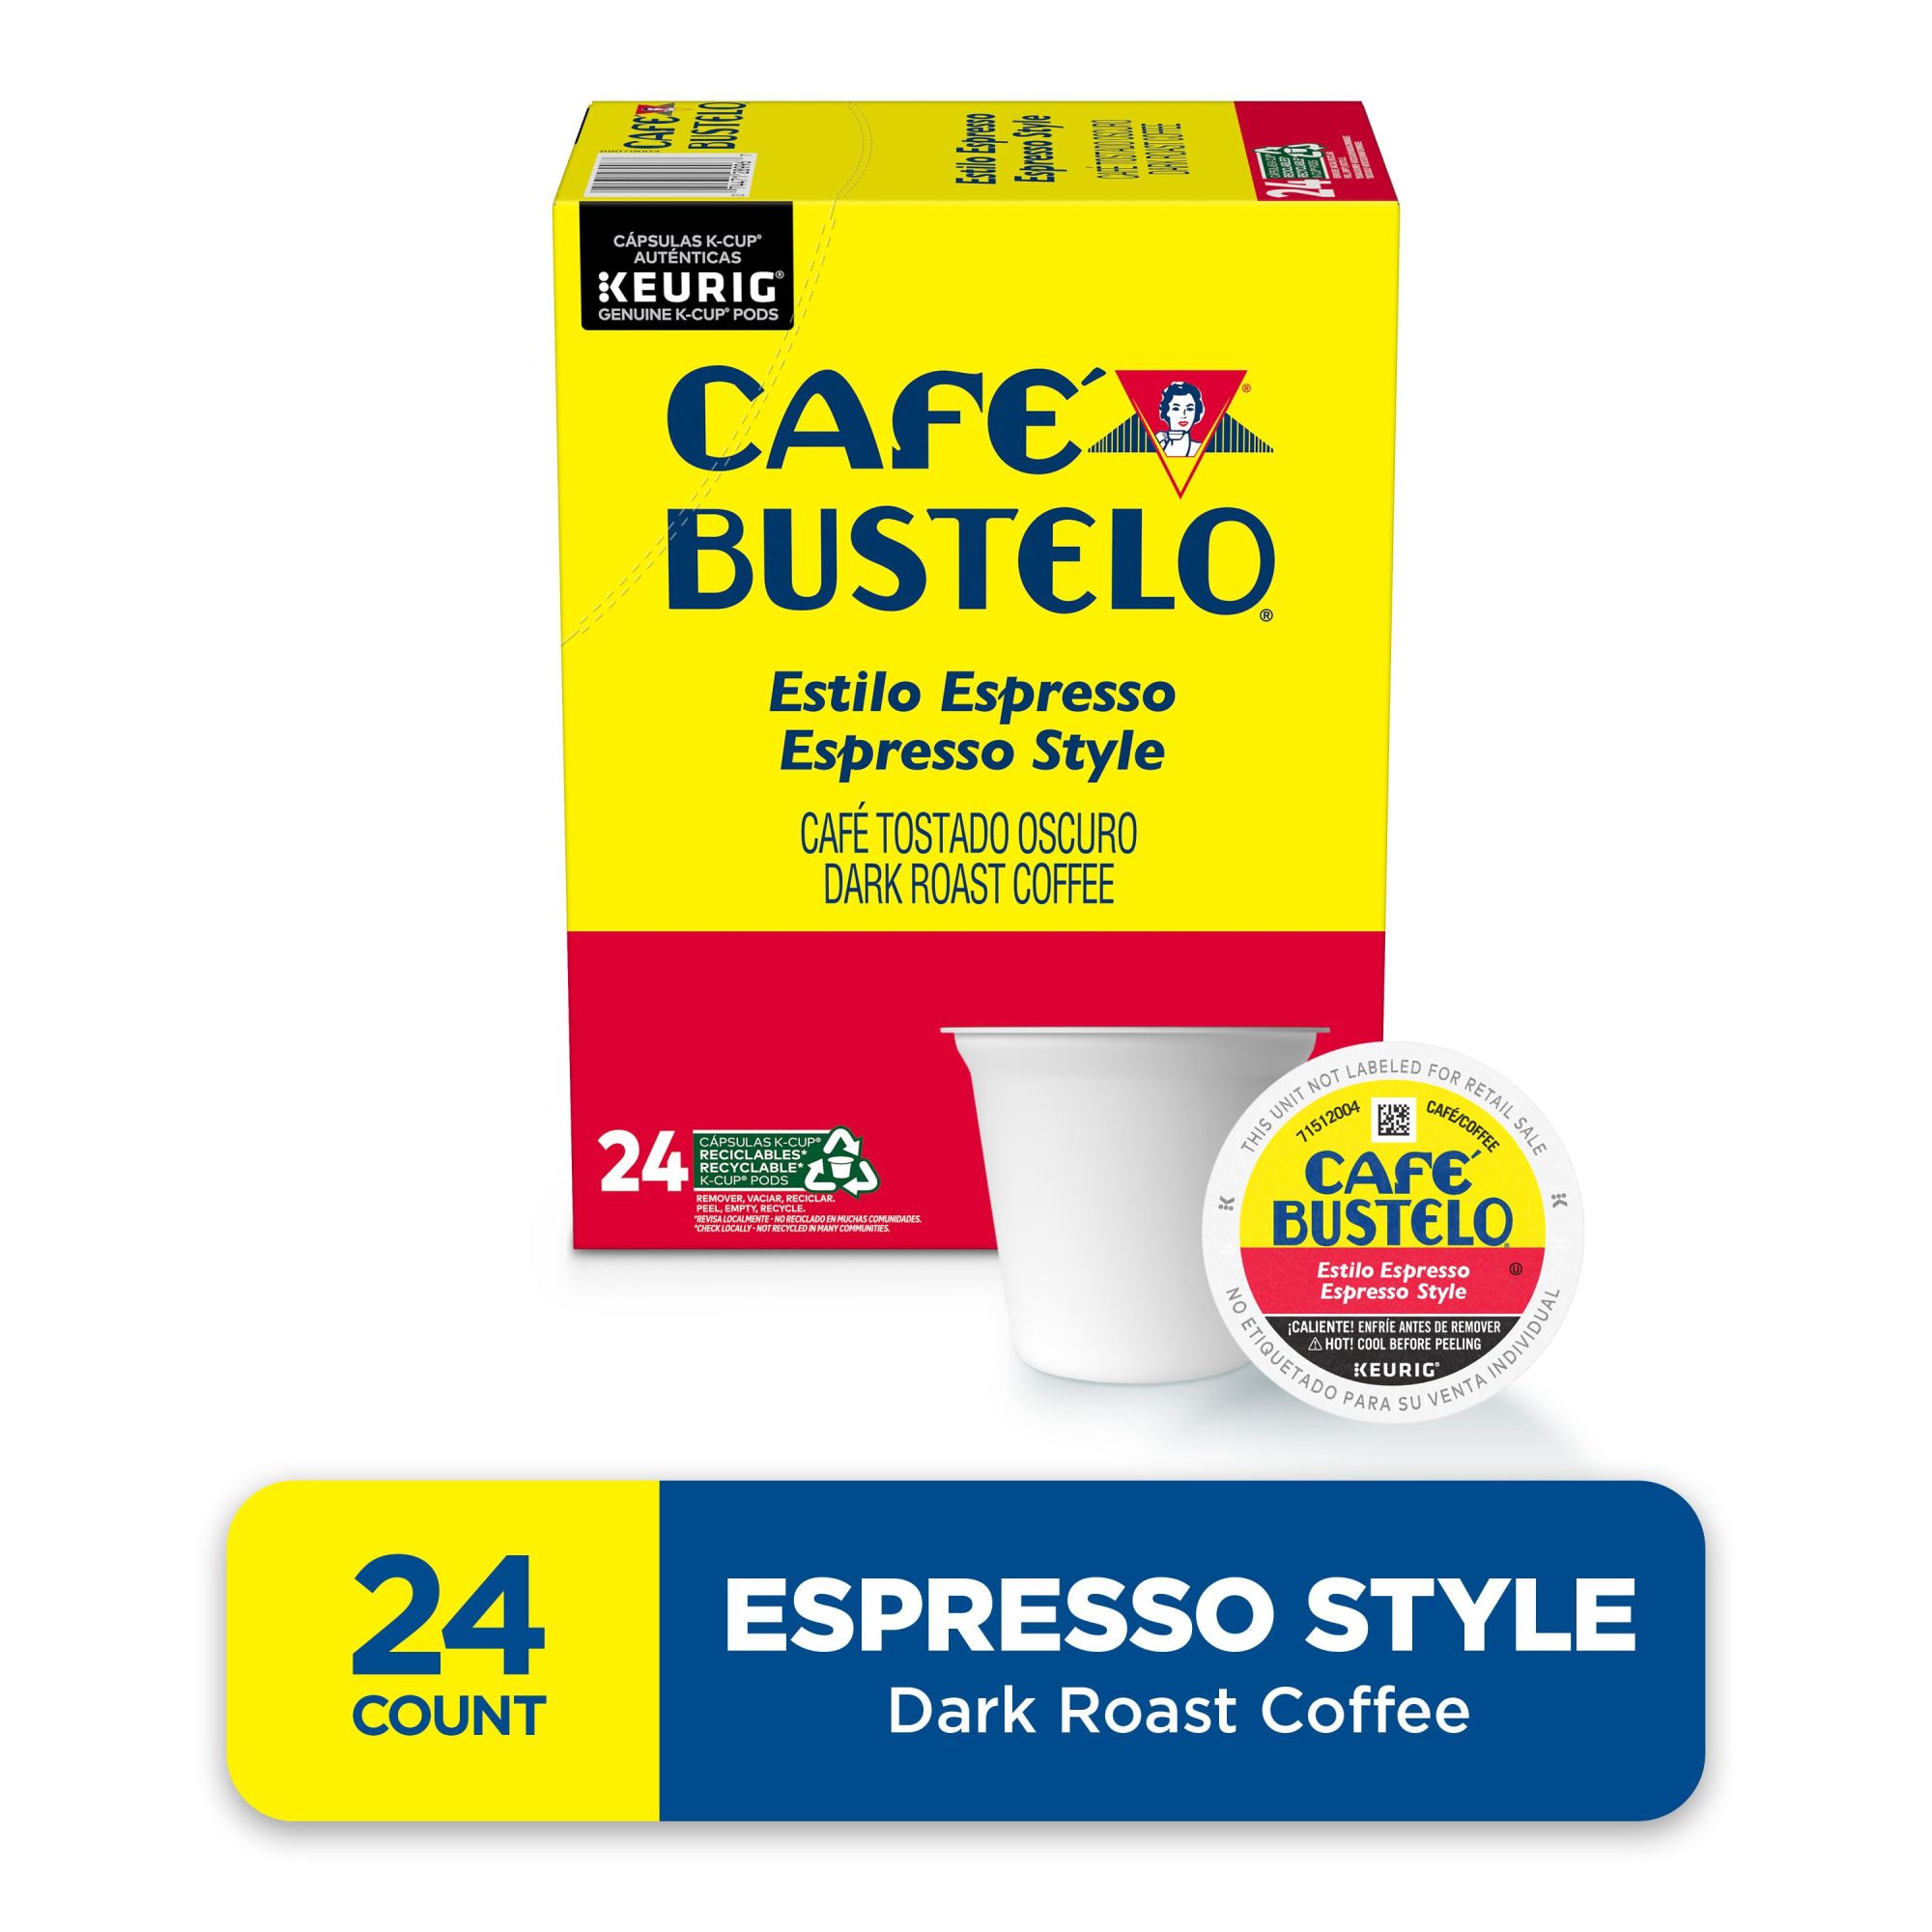 Caf Bustelo Espresso Style, Dark Roast Coffee, Keurig K-Cup Pods, 24 Count Box - image 3 of 12